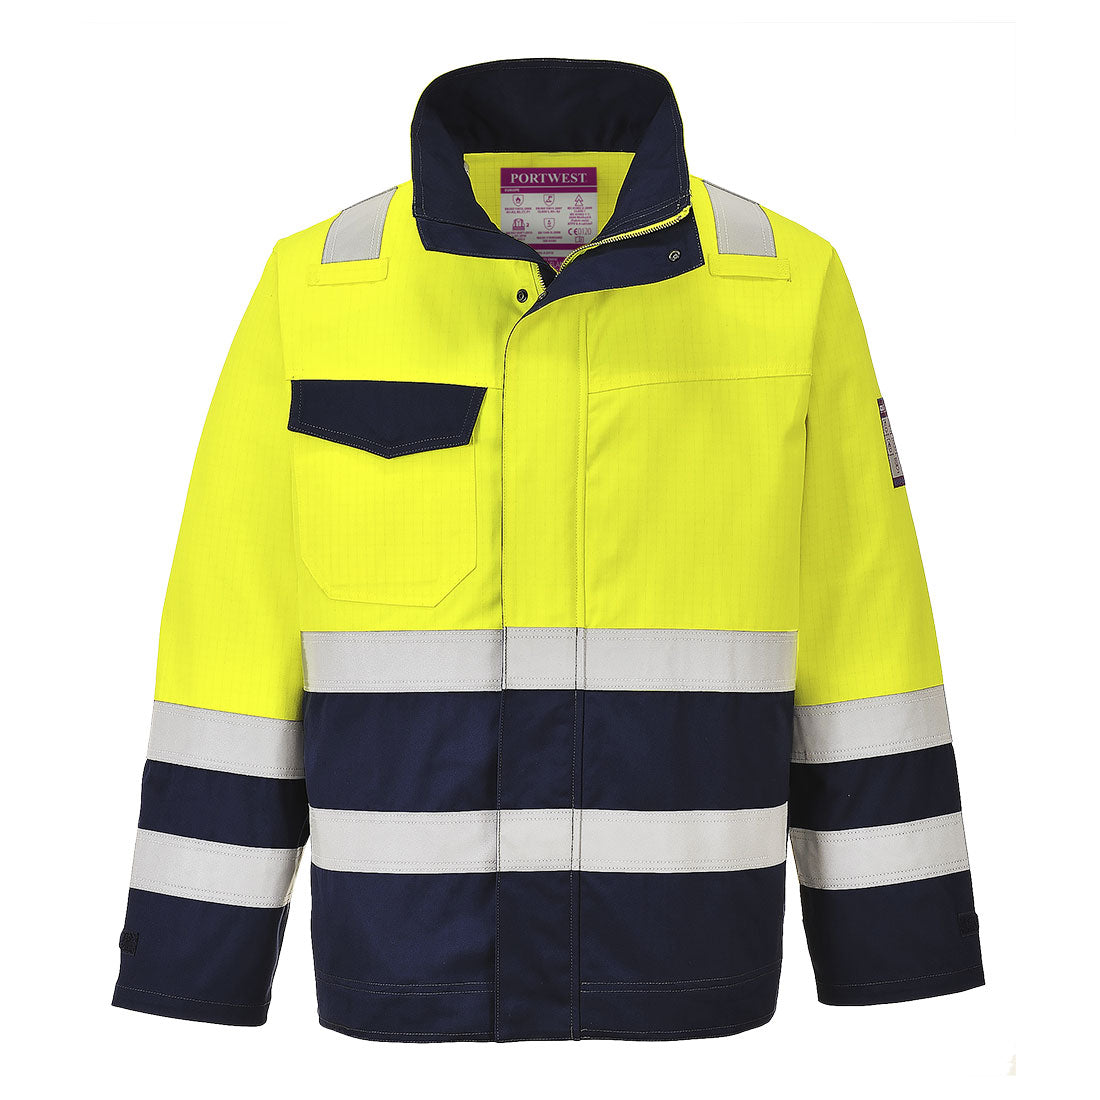 Portwest MV25 Hi Vis Modaflame Jacket - Flame Retardant 1#colour_yellow-navy